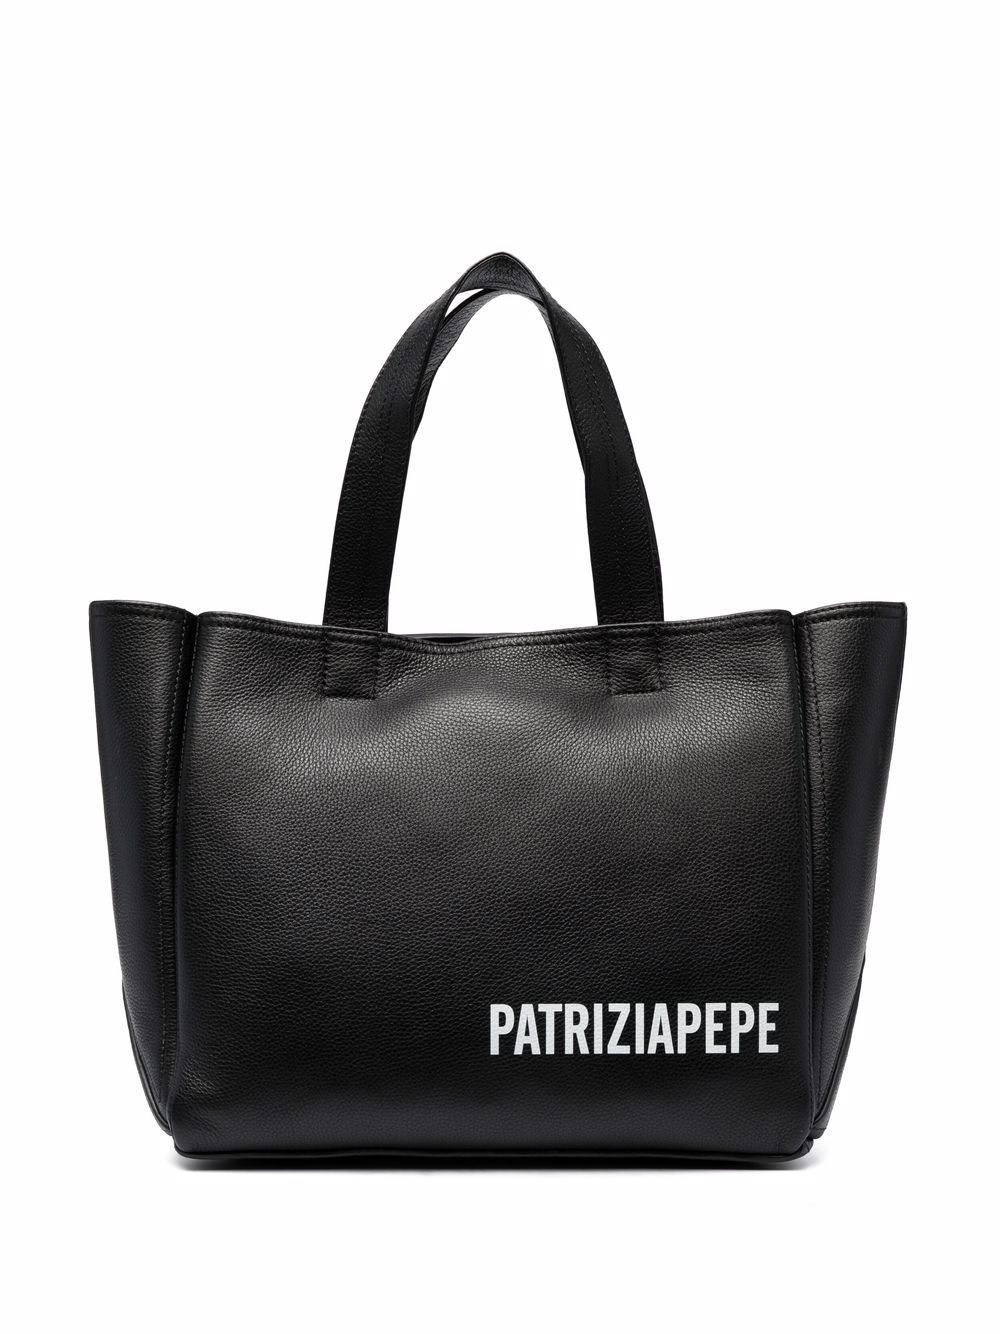 фото Patrizia pepe сумка-тоут с логотипом